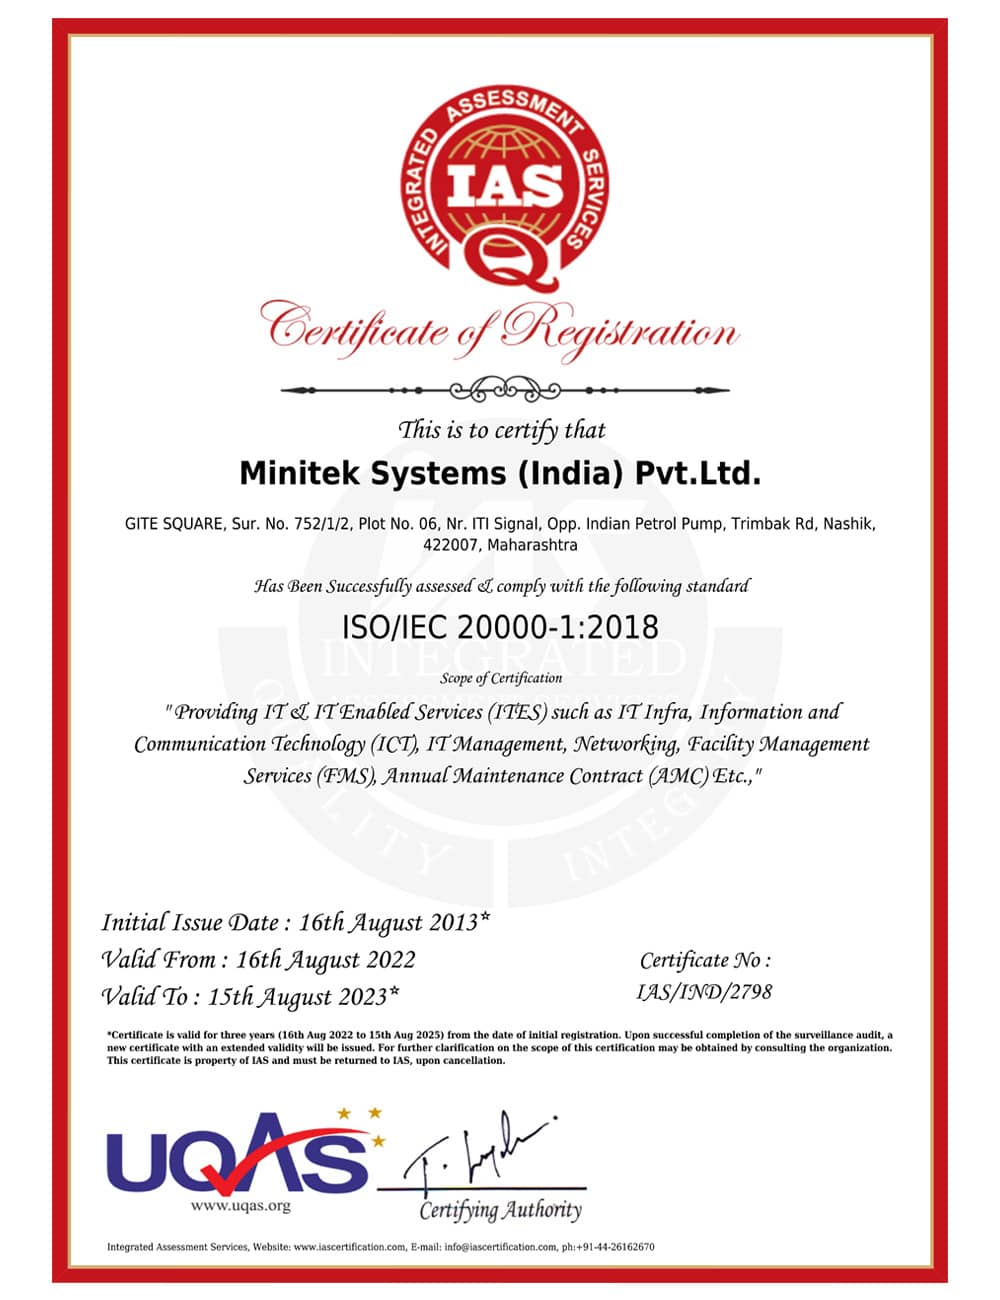 ISO 20000-1 2018 Certificate Recertification 2022-23